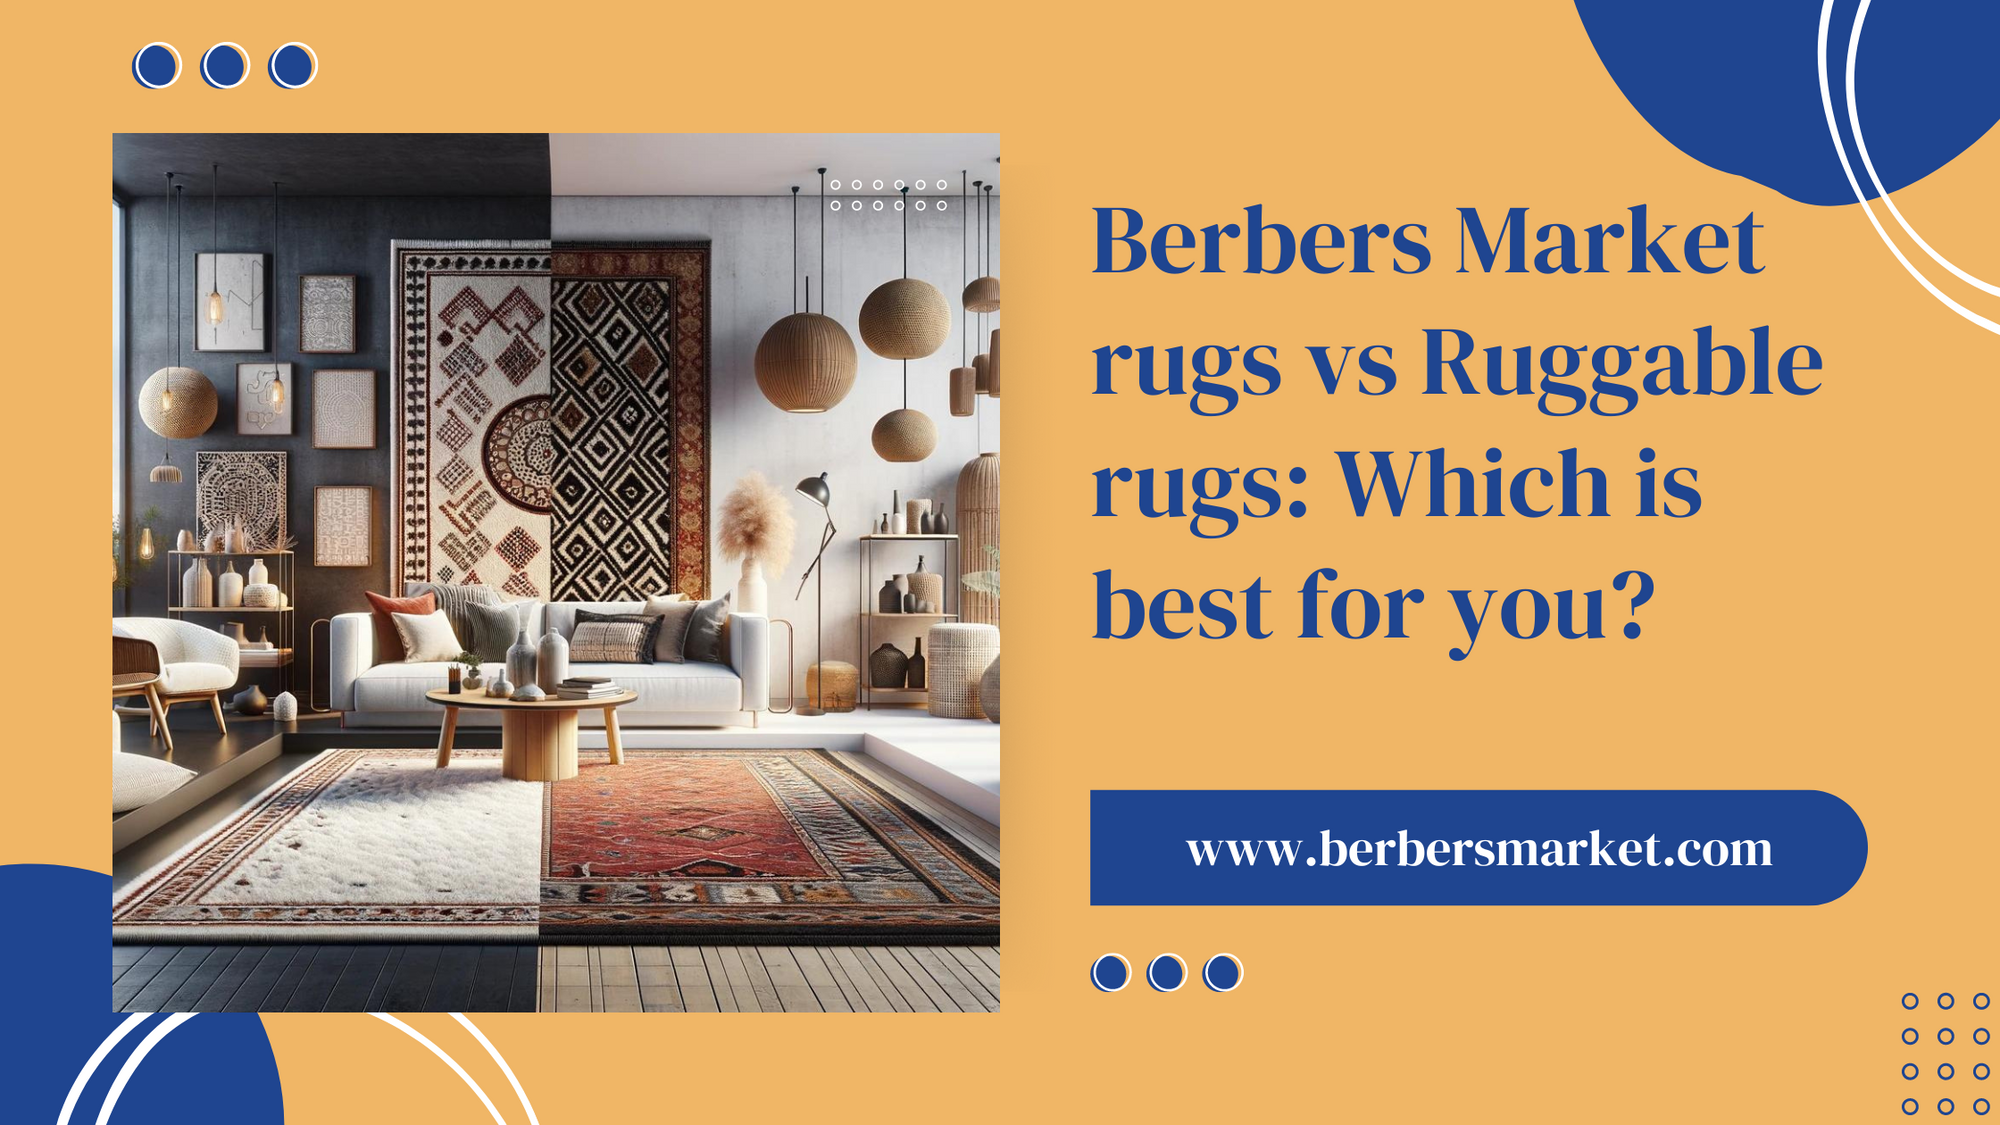 Comparison between Berbers Market rugs and Ruggable rugs